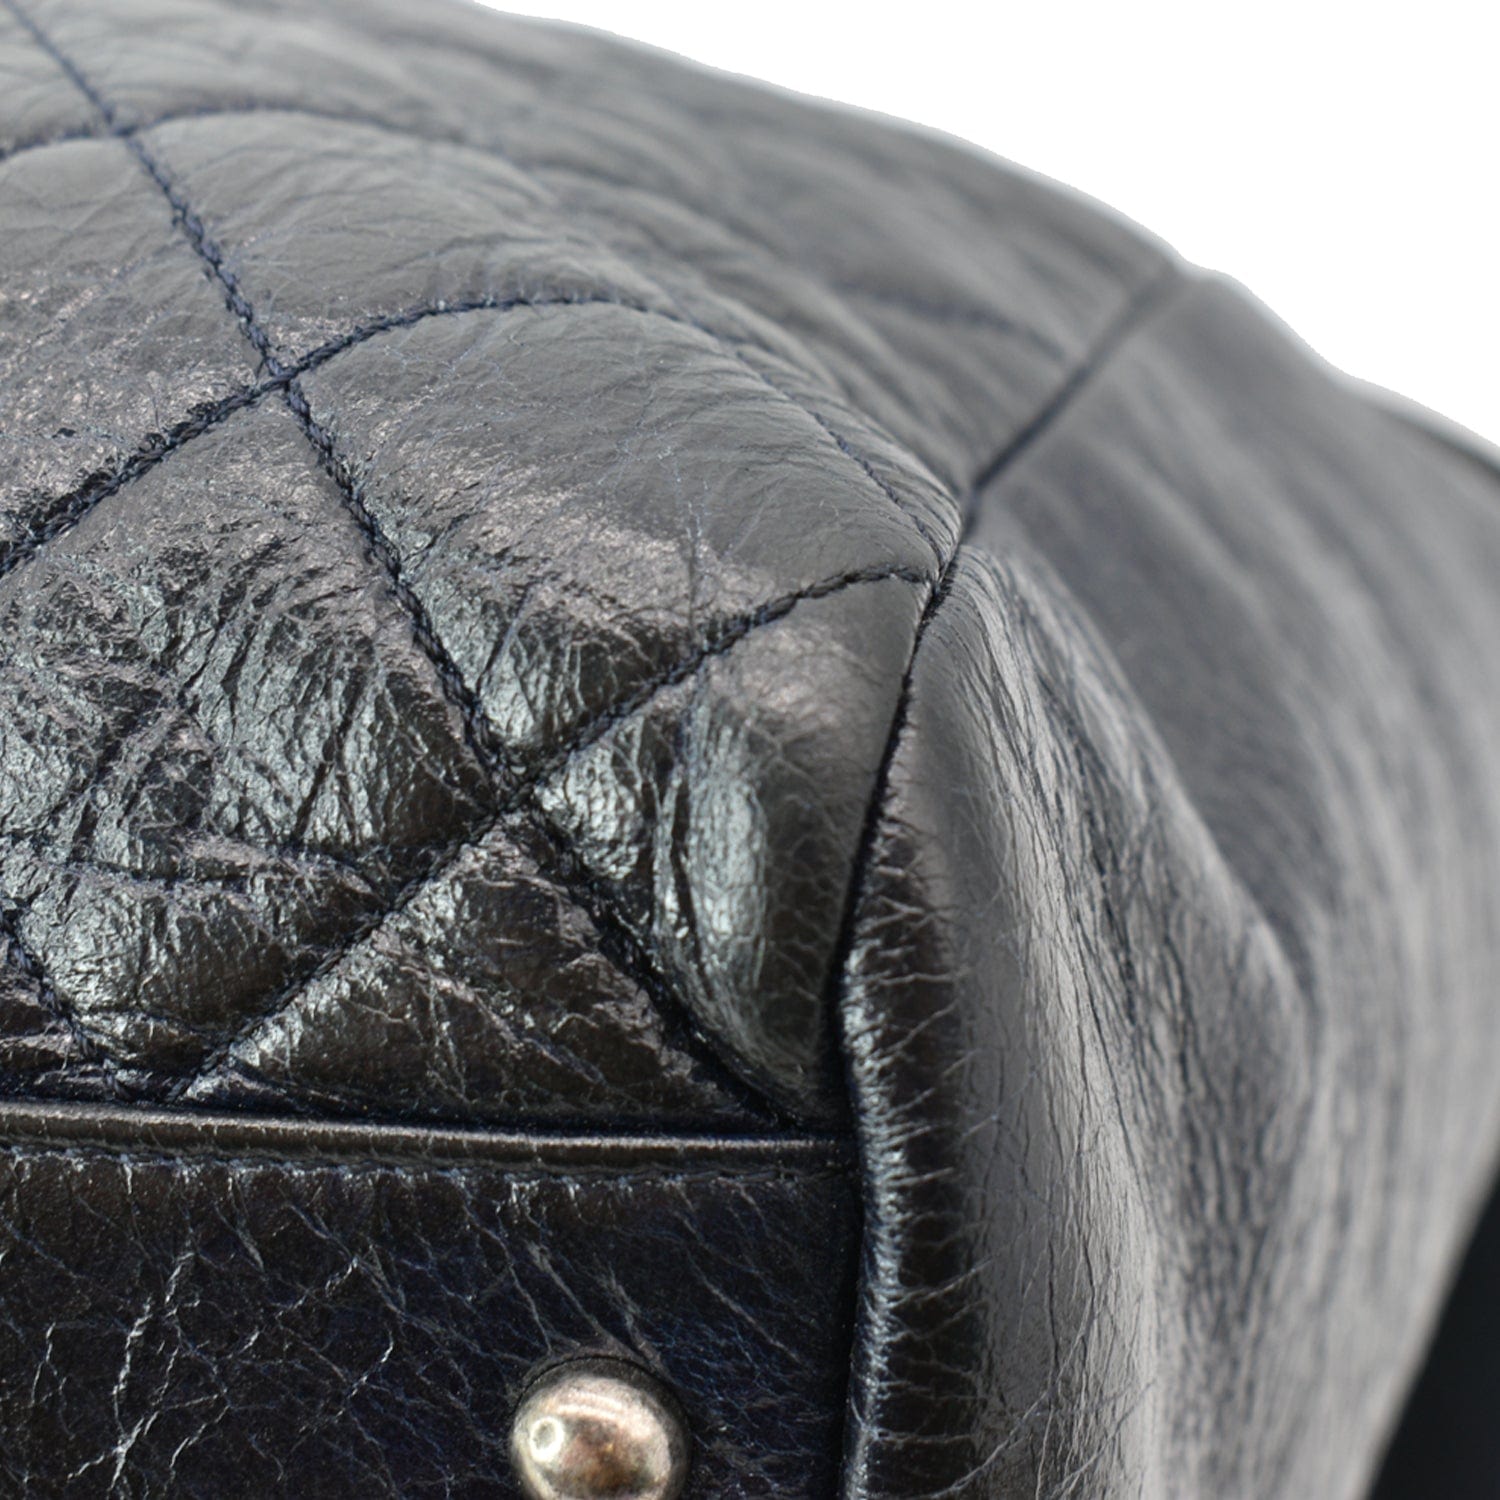 Chanel Black Quilted Glazed Leather Portobello Tote Chanel